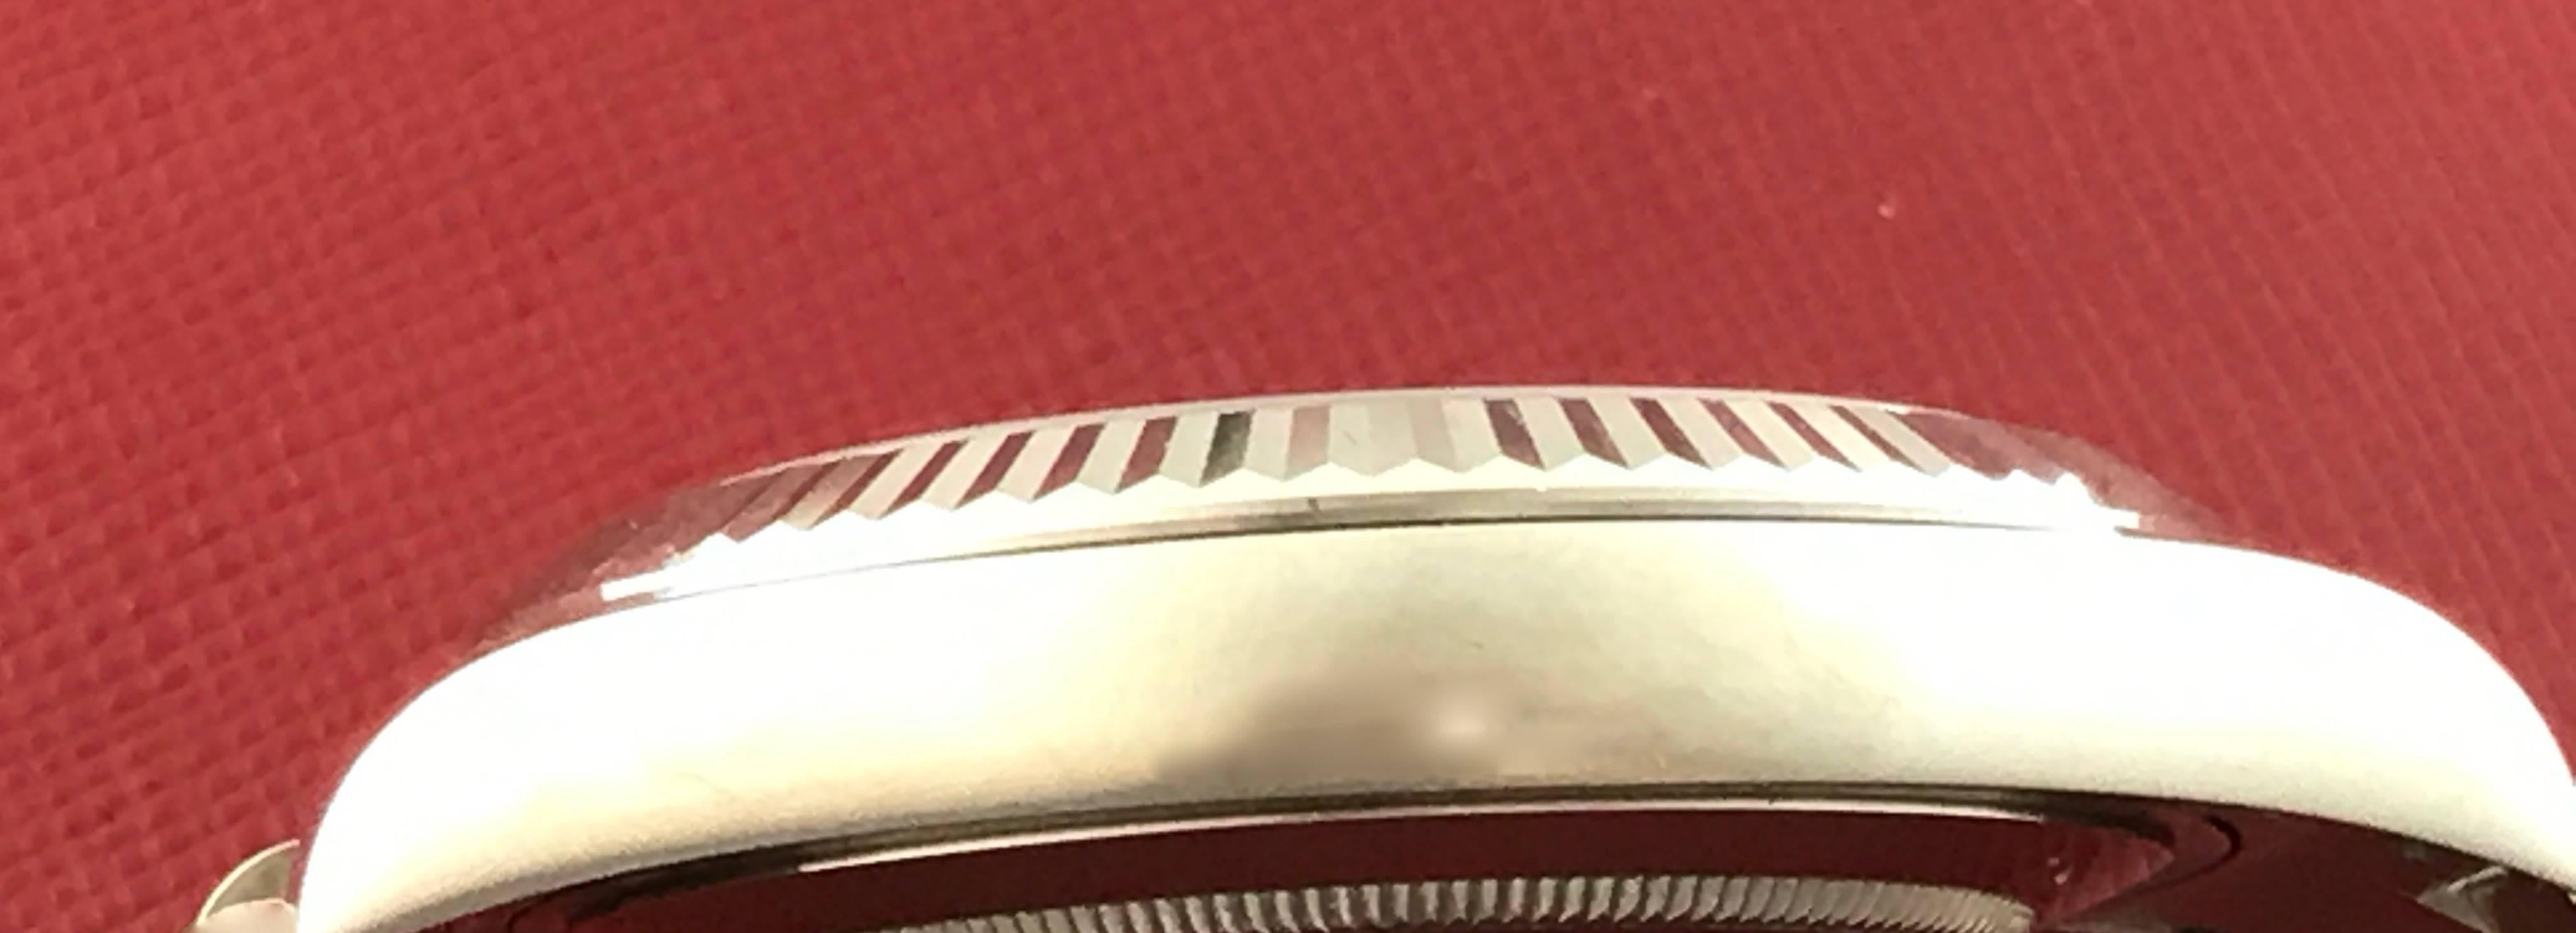 Men's Rolex White Gold President Day-Date II Automatic Wristwatch Ref 218239